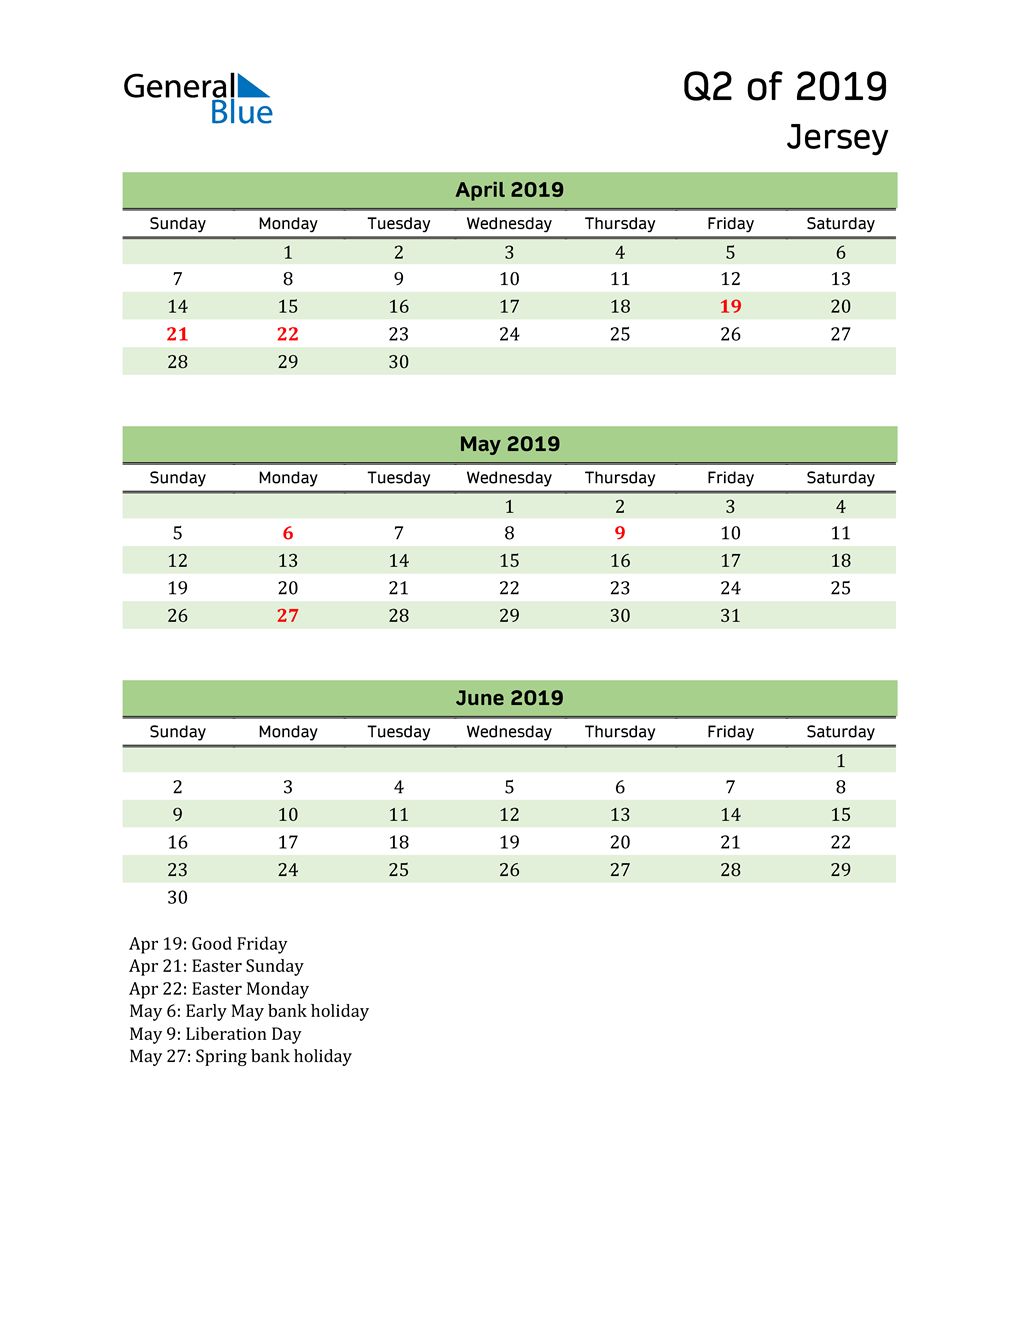  Quarterly Calendar 2019 with Jersey Holidays 